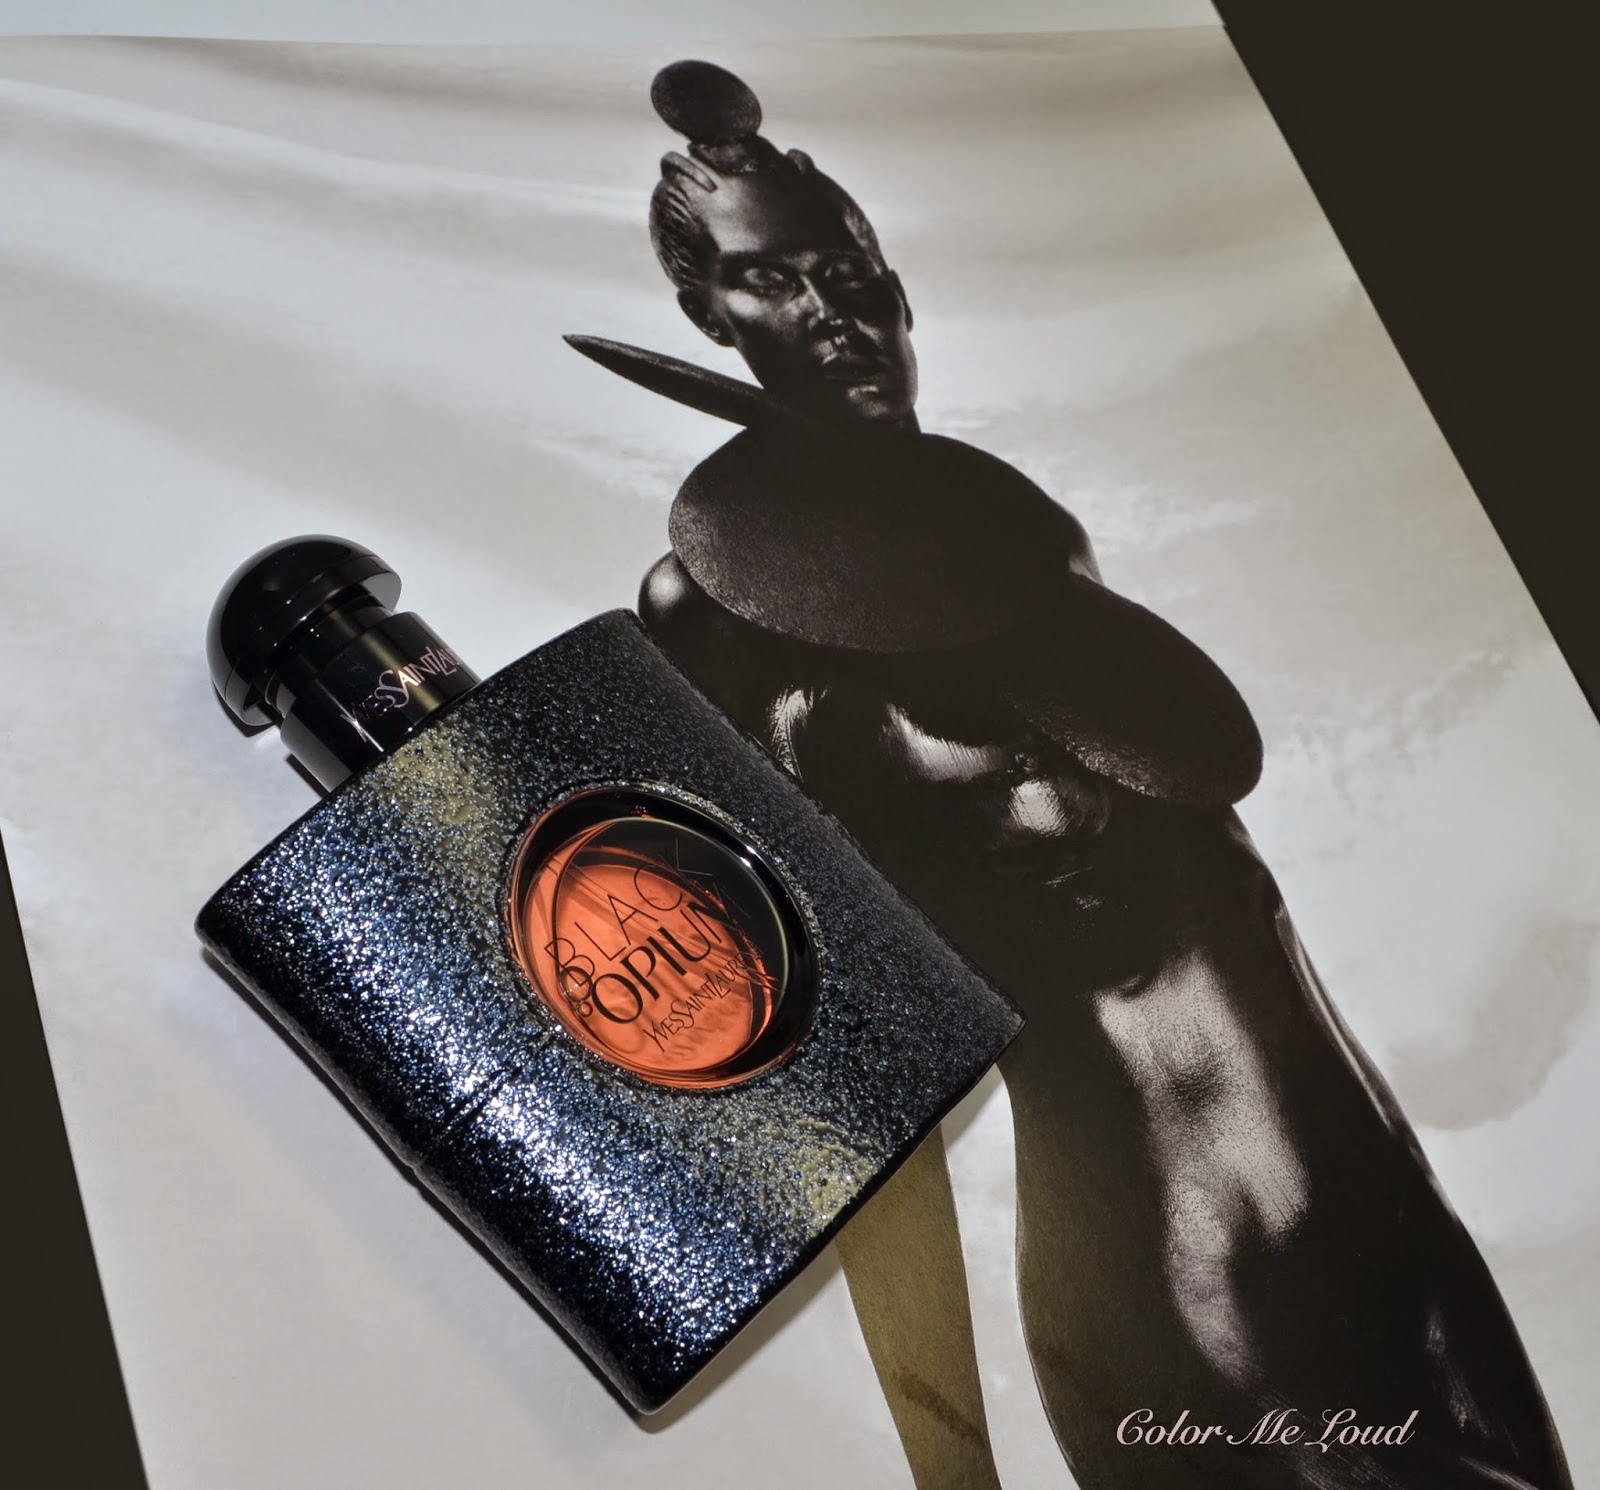 A New Black Opium??? [ YSL Black Opium Le Parfum Review ] 